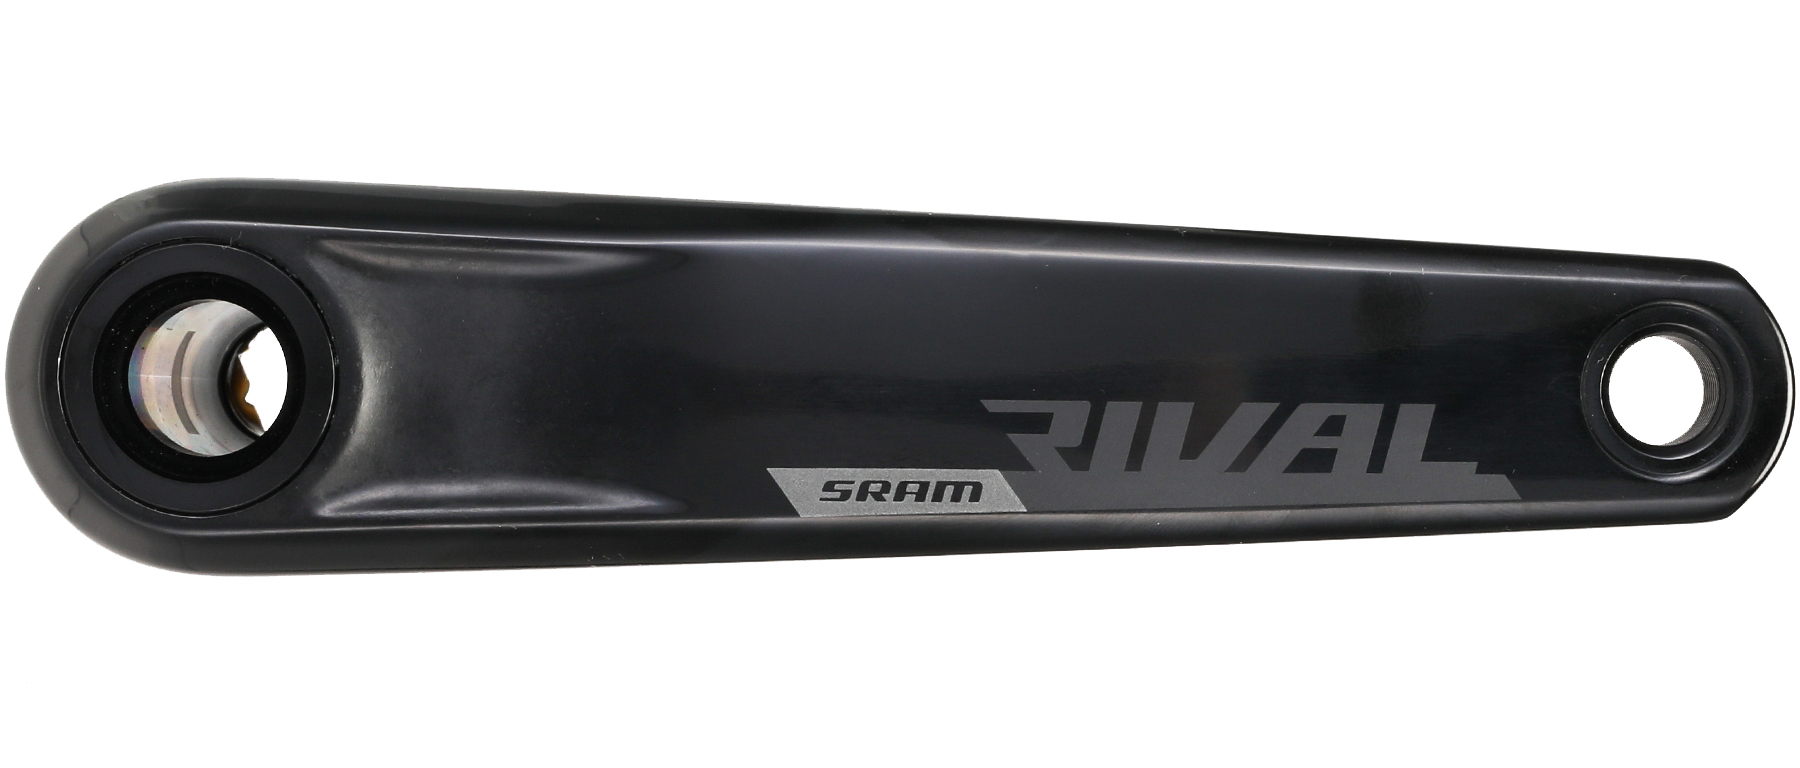 SRAM Rival 1 DUB Wide 12-Speed Crankset